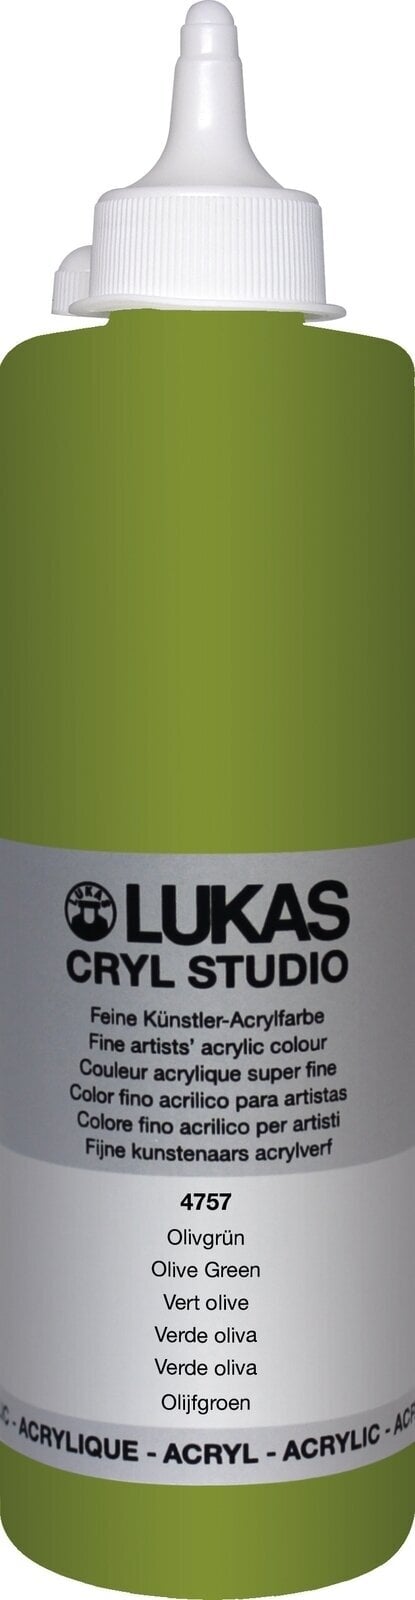 Acrylic Paint Lukas Cryl Studio Acrylic Paint 500 ml Olive Green